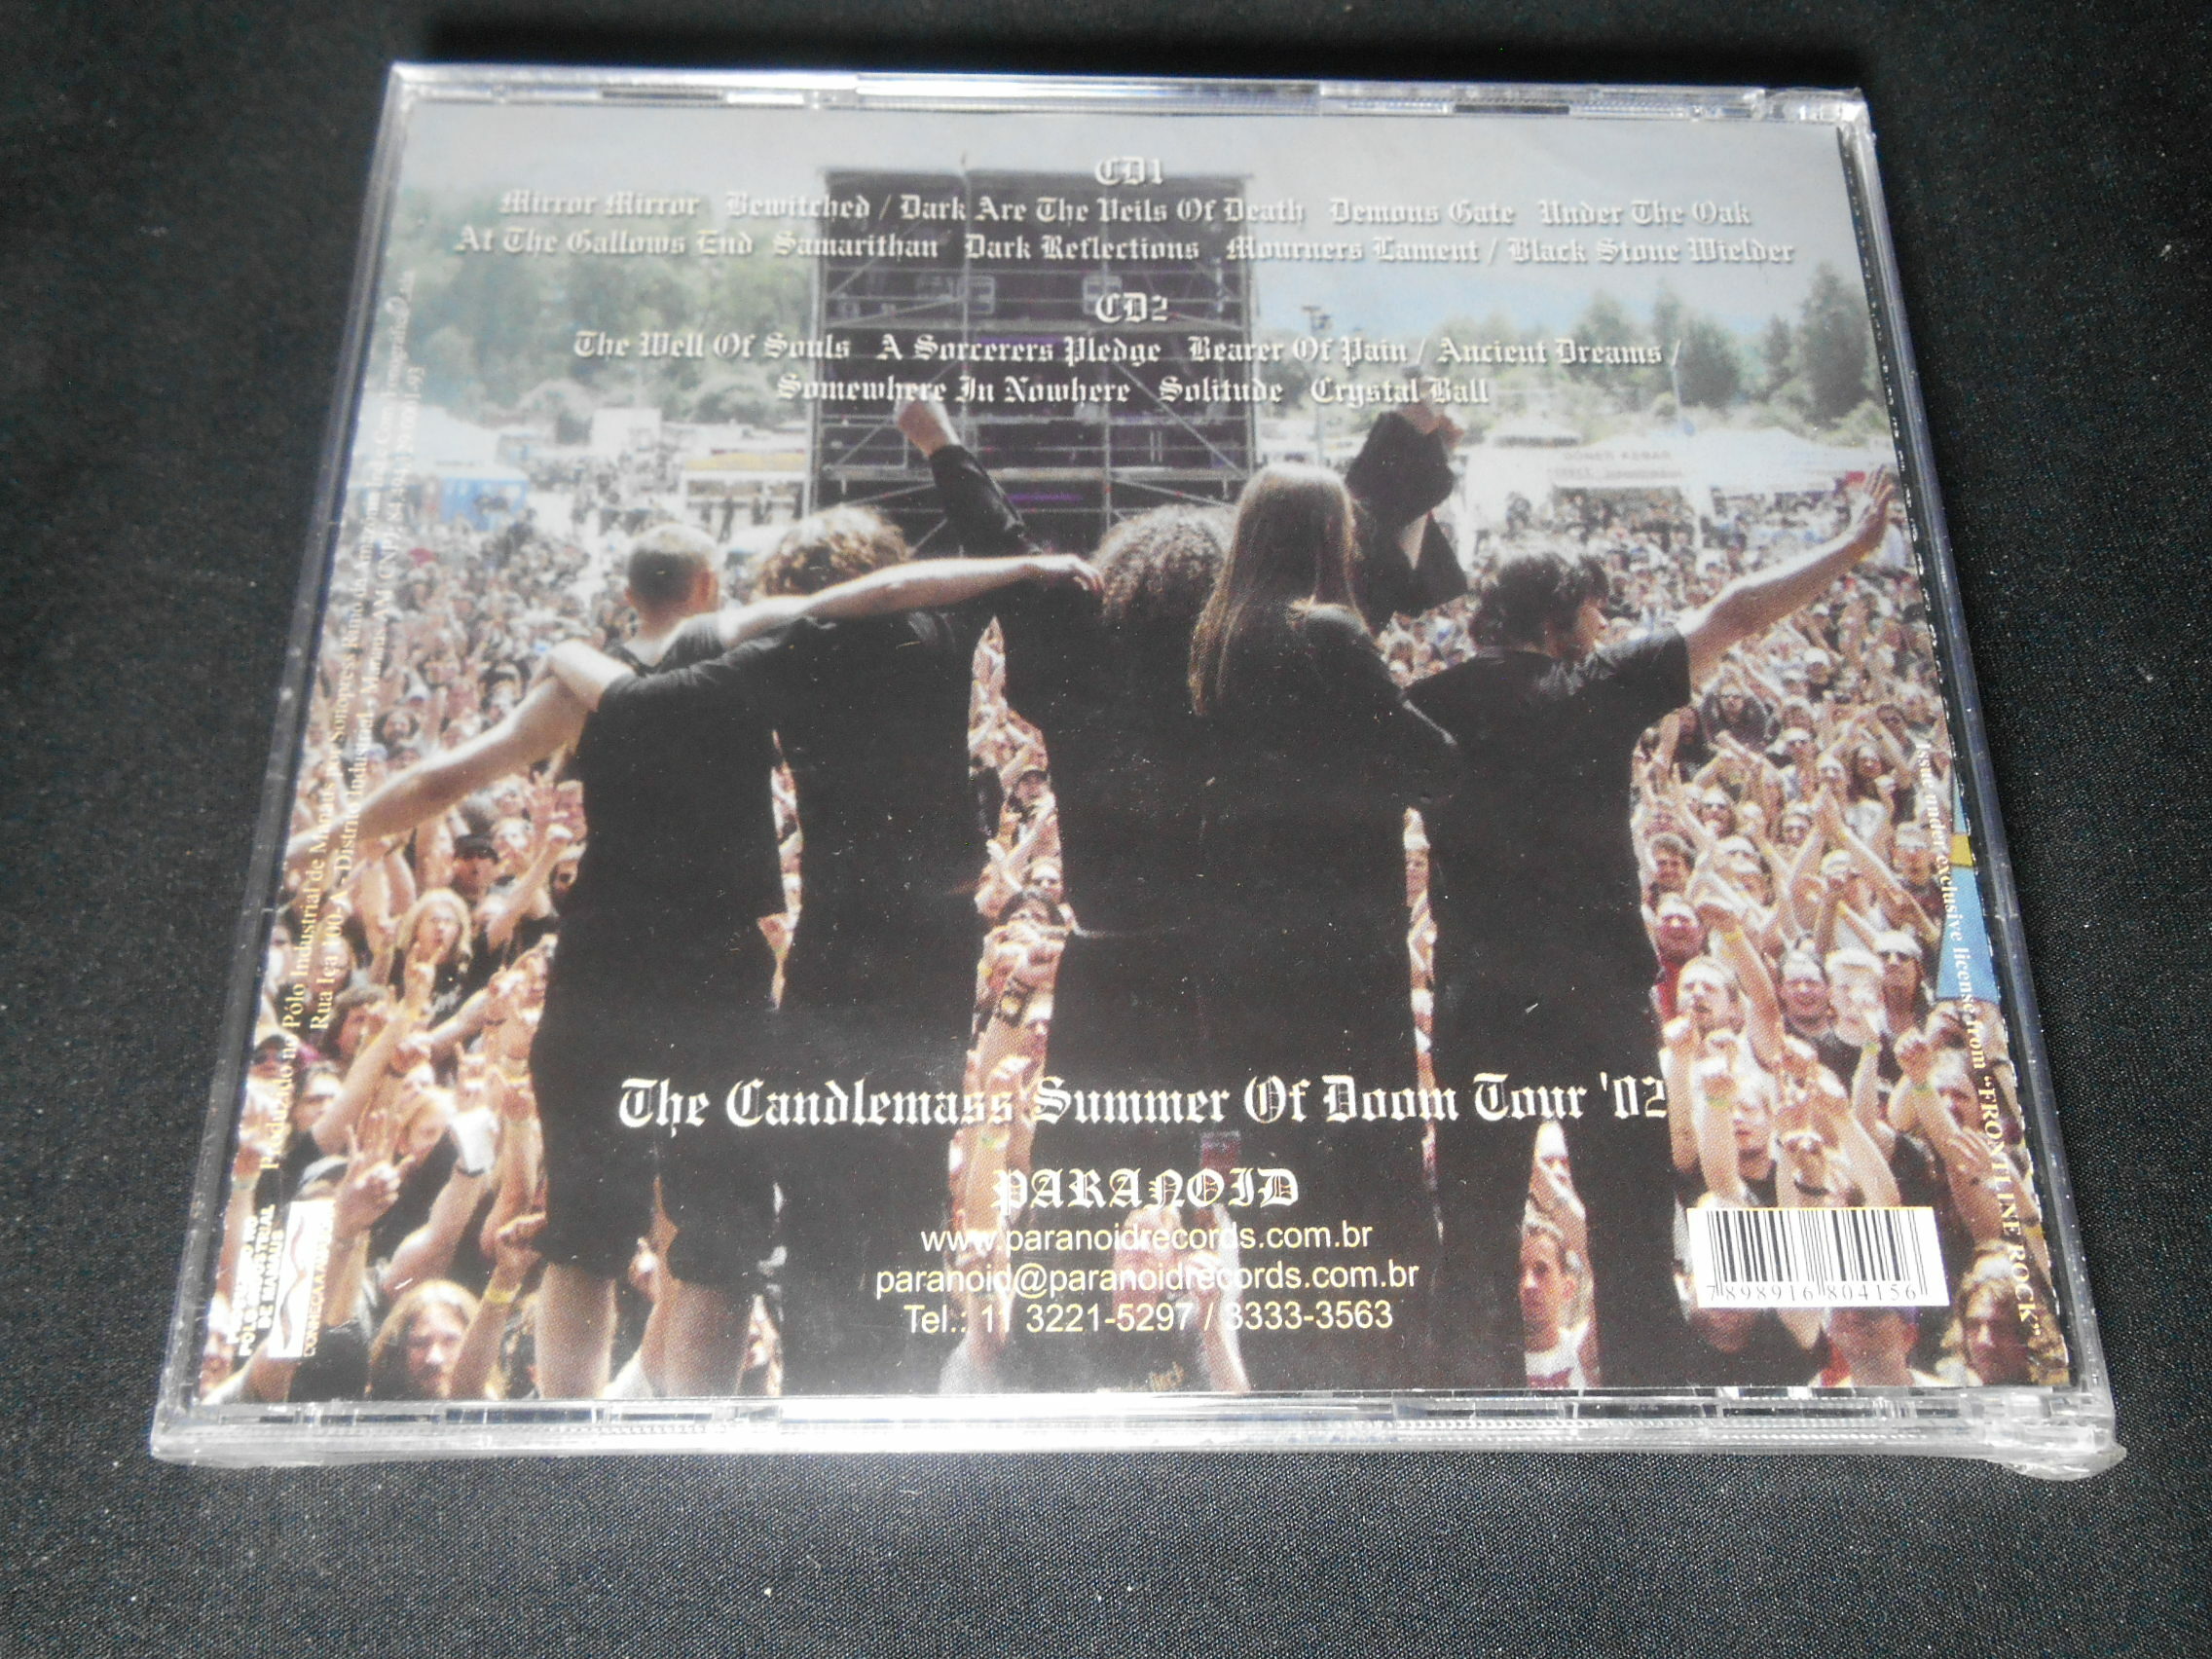 CD - Candlemass - Doomed For Live - Reunion 2002 (Duplo/Lacrado)